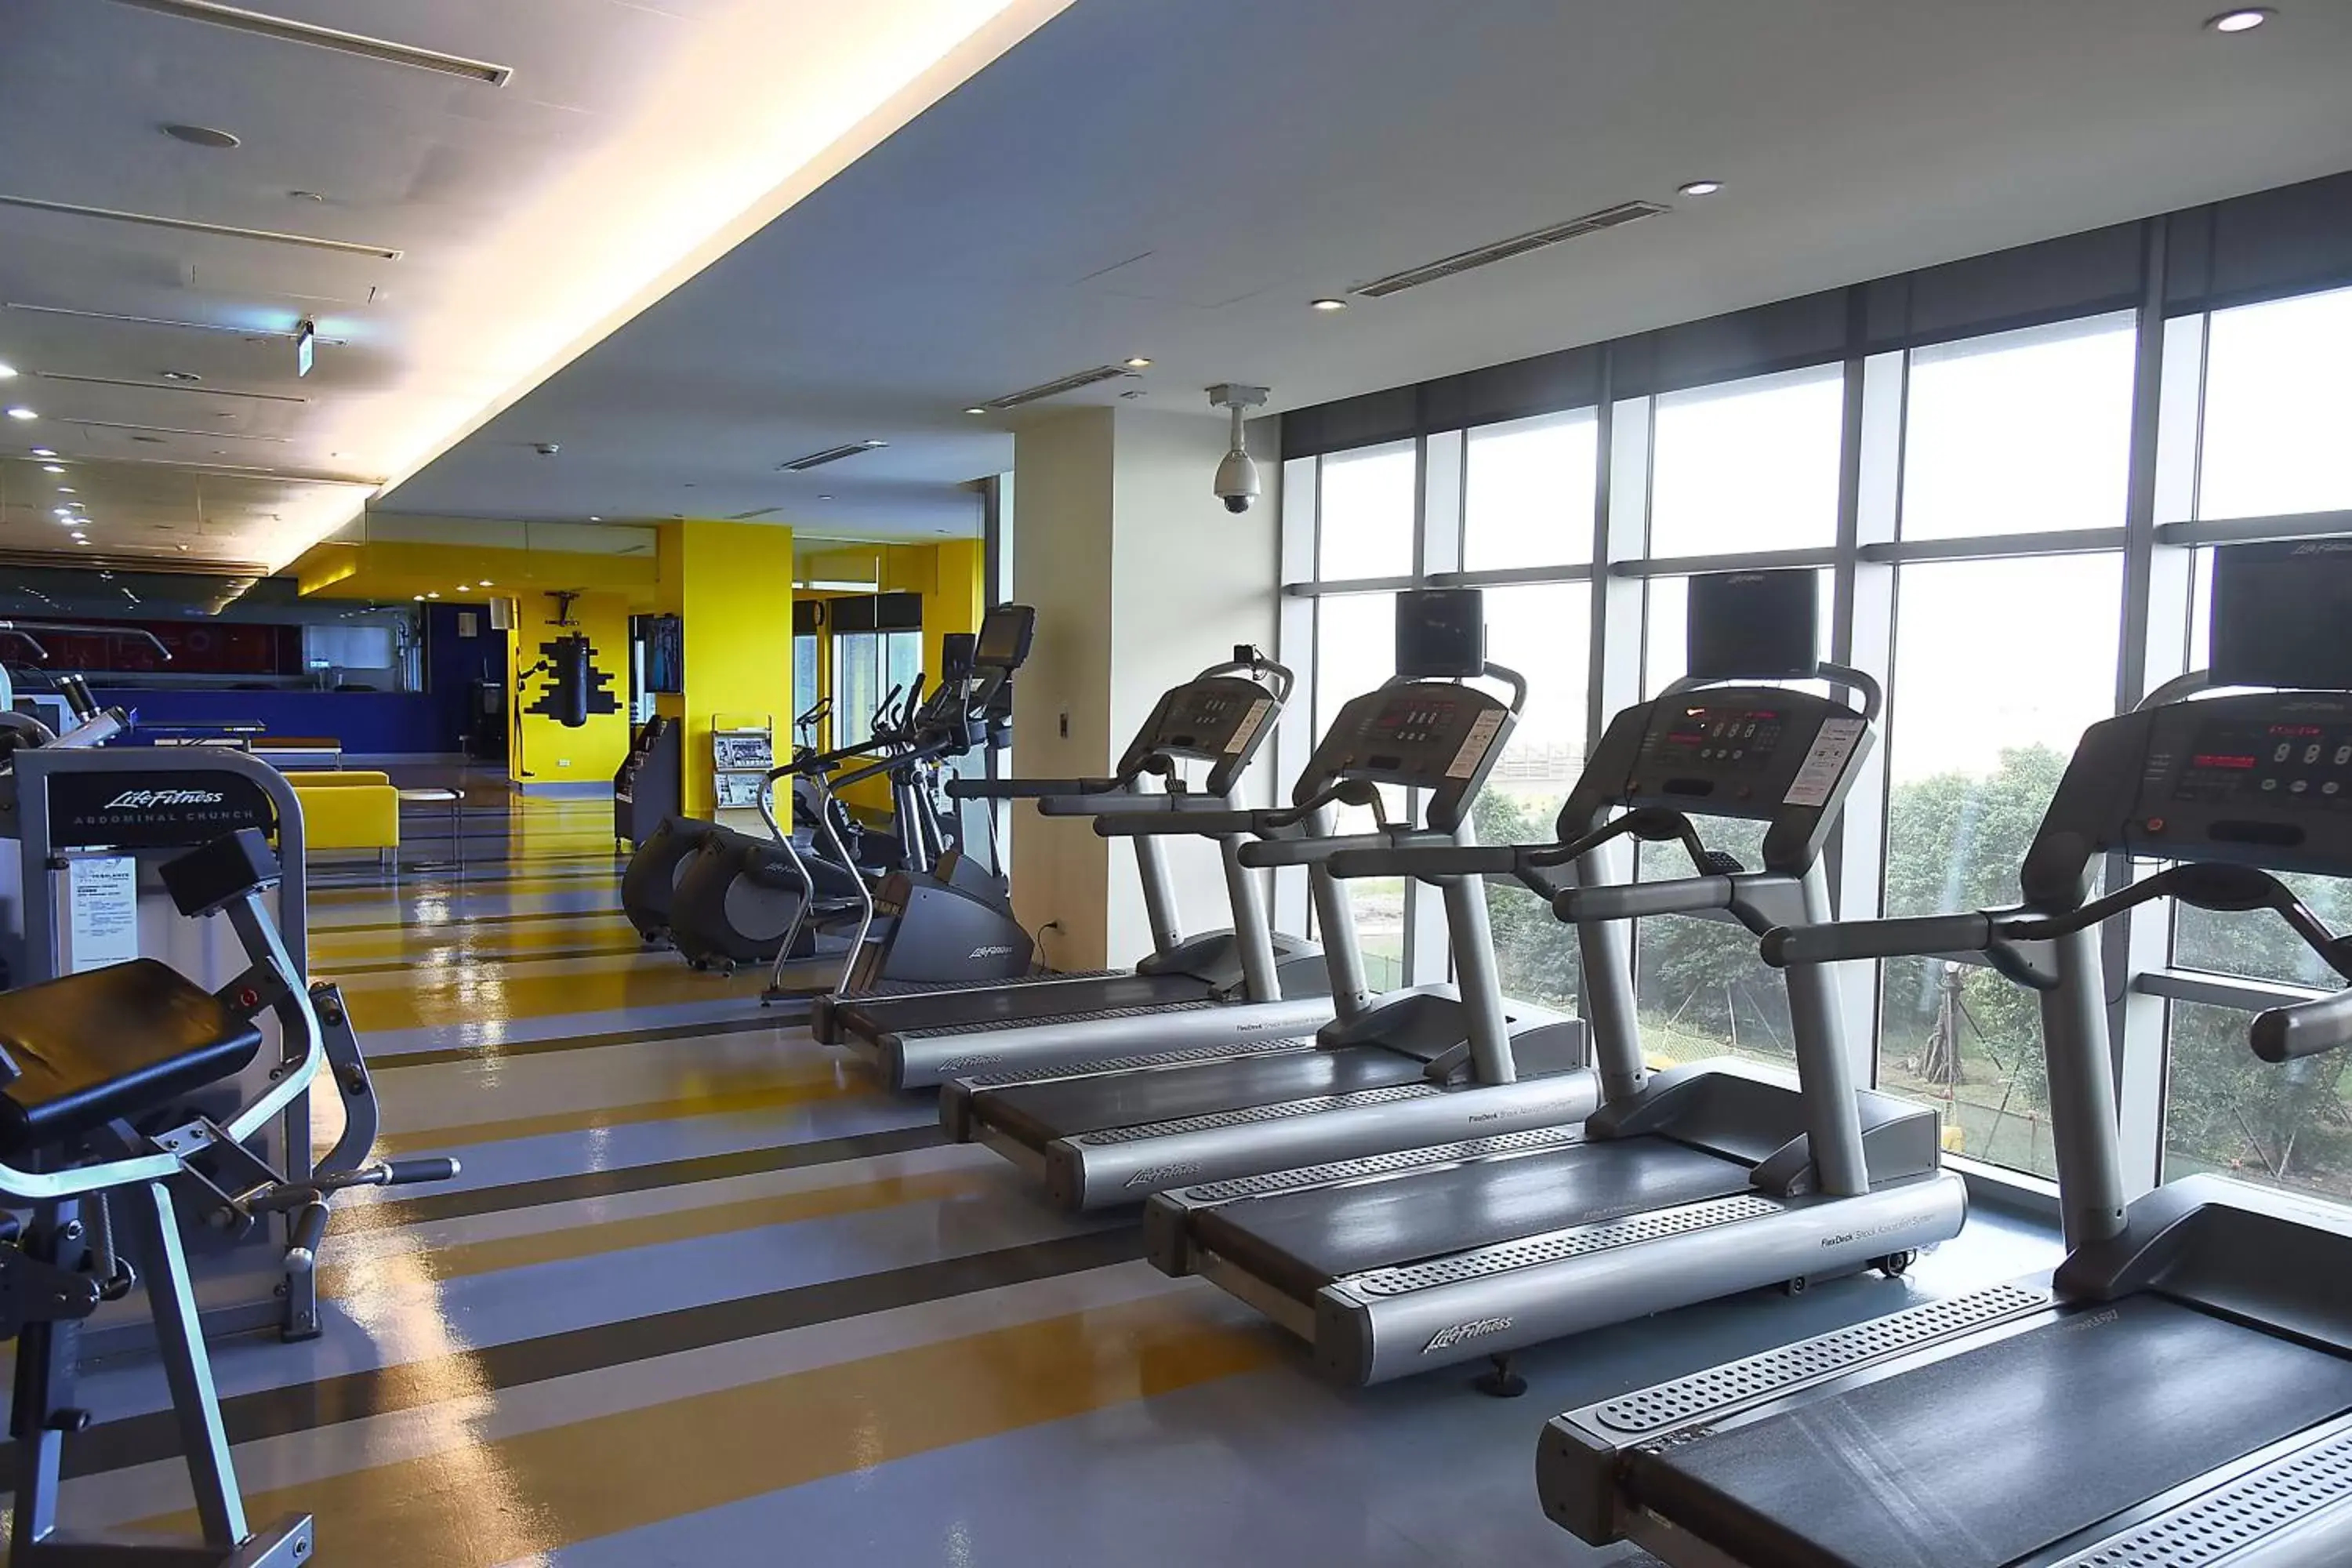 Fitness centre/facilities, Fitness Center/Facilities in Novotel Taipei Taoyuan International Airport